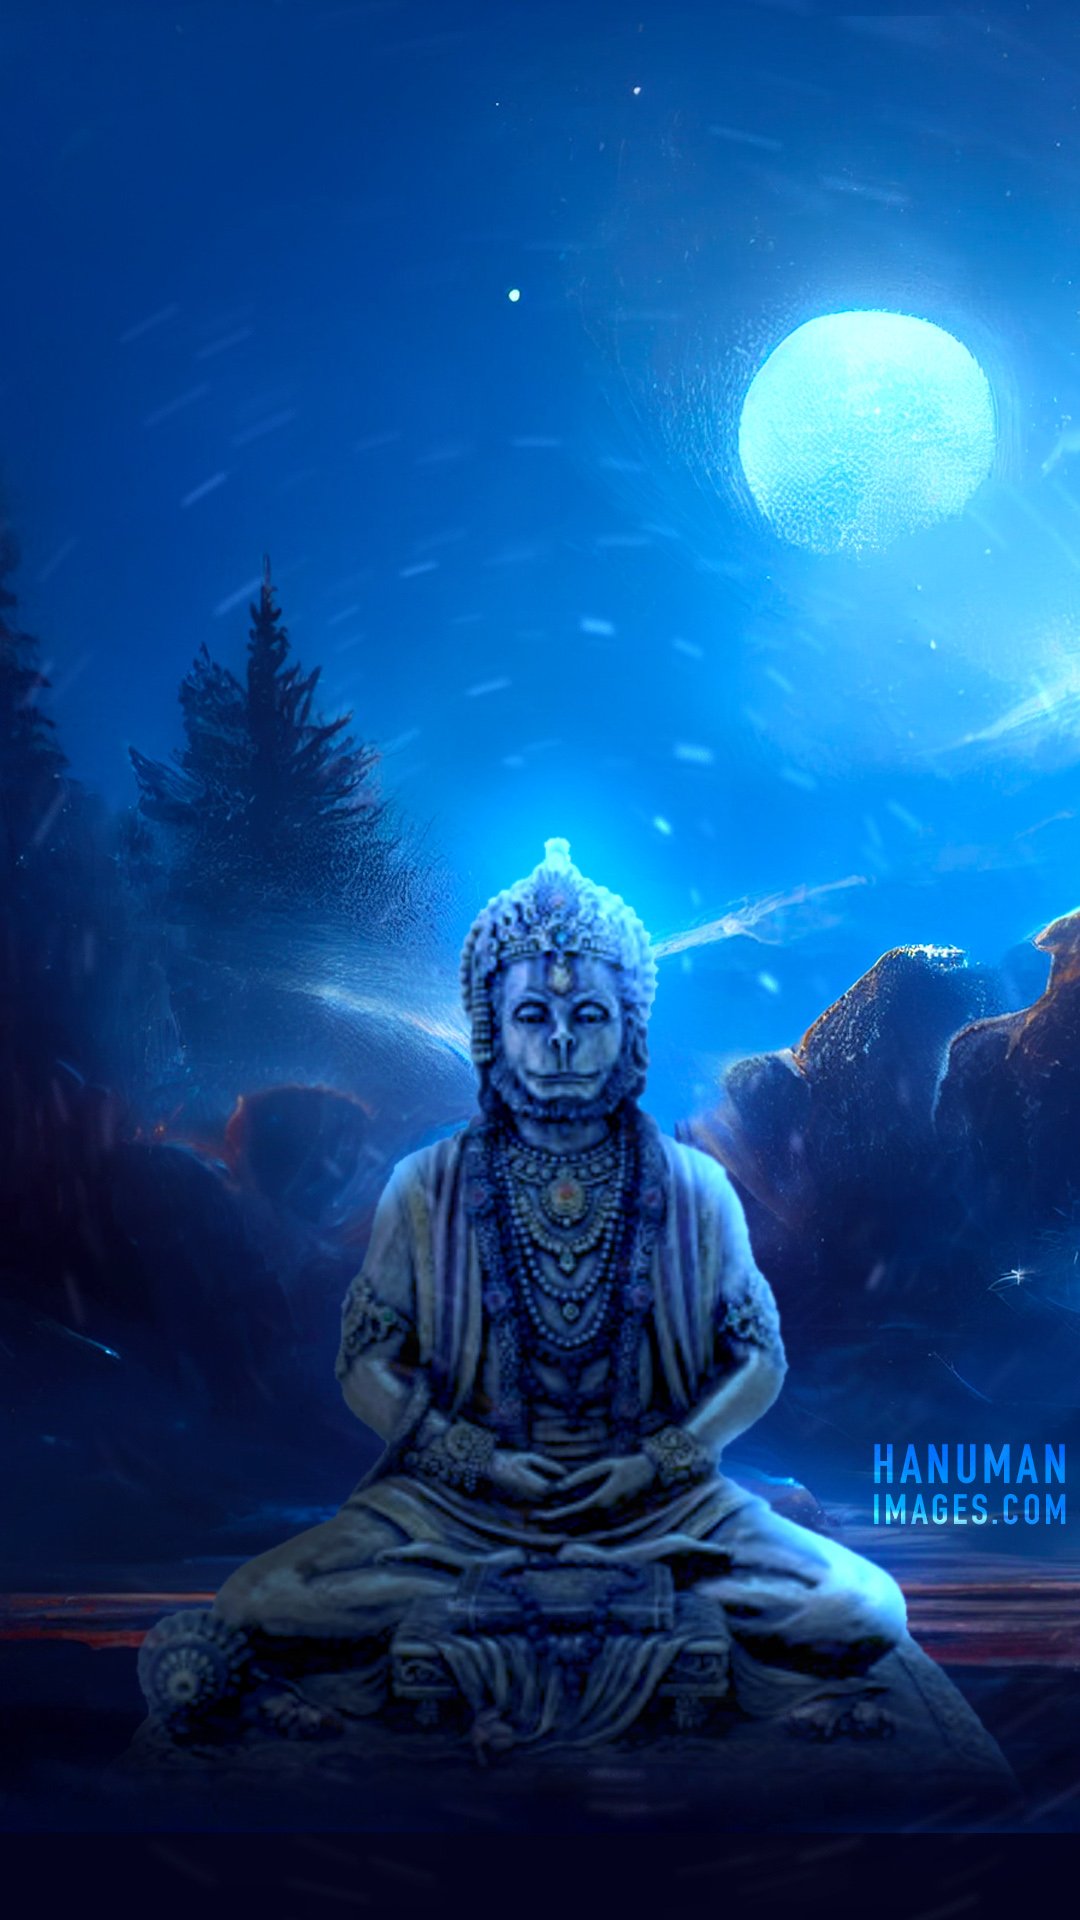 Hanuman images | Best hanuman images, Free Downloads